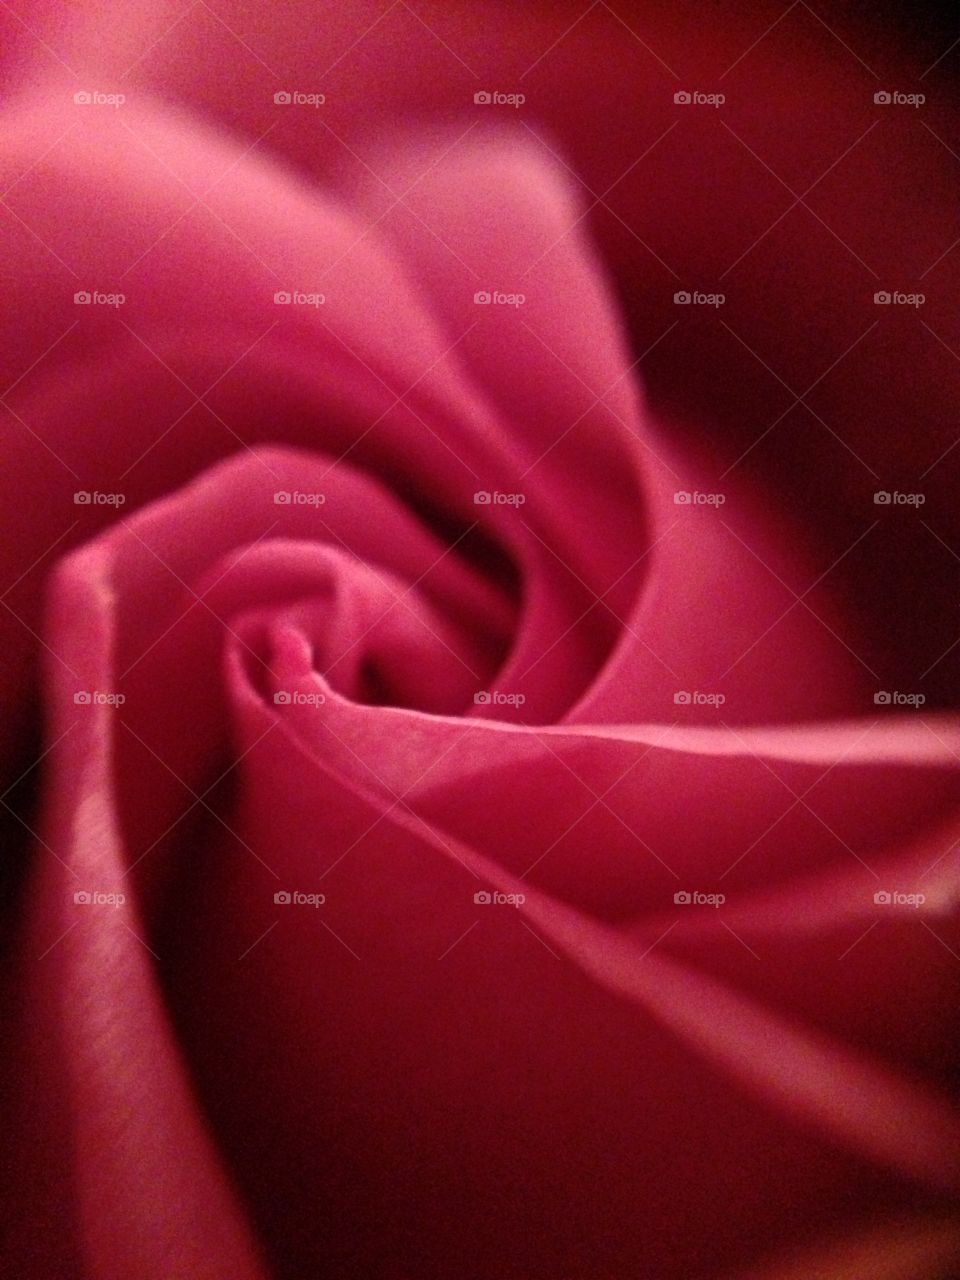 Baby rose taken with iphone macro lens